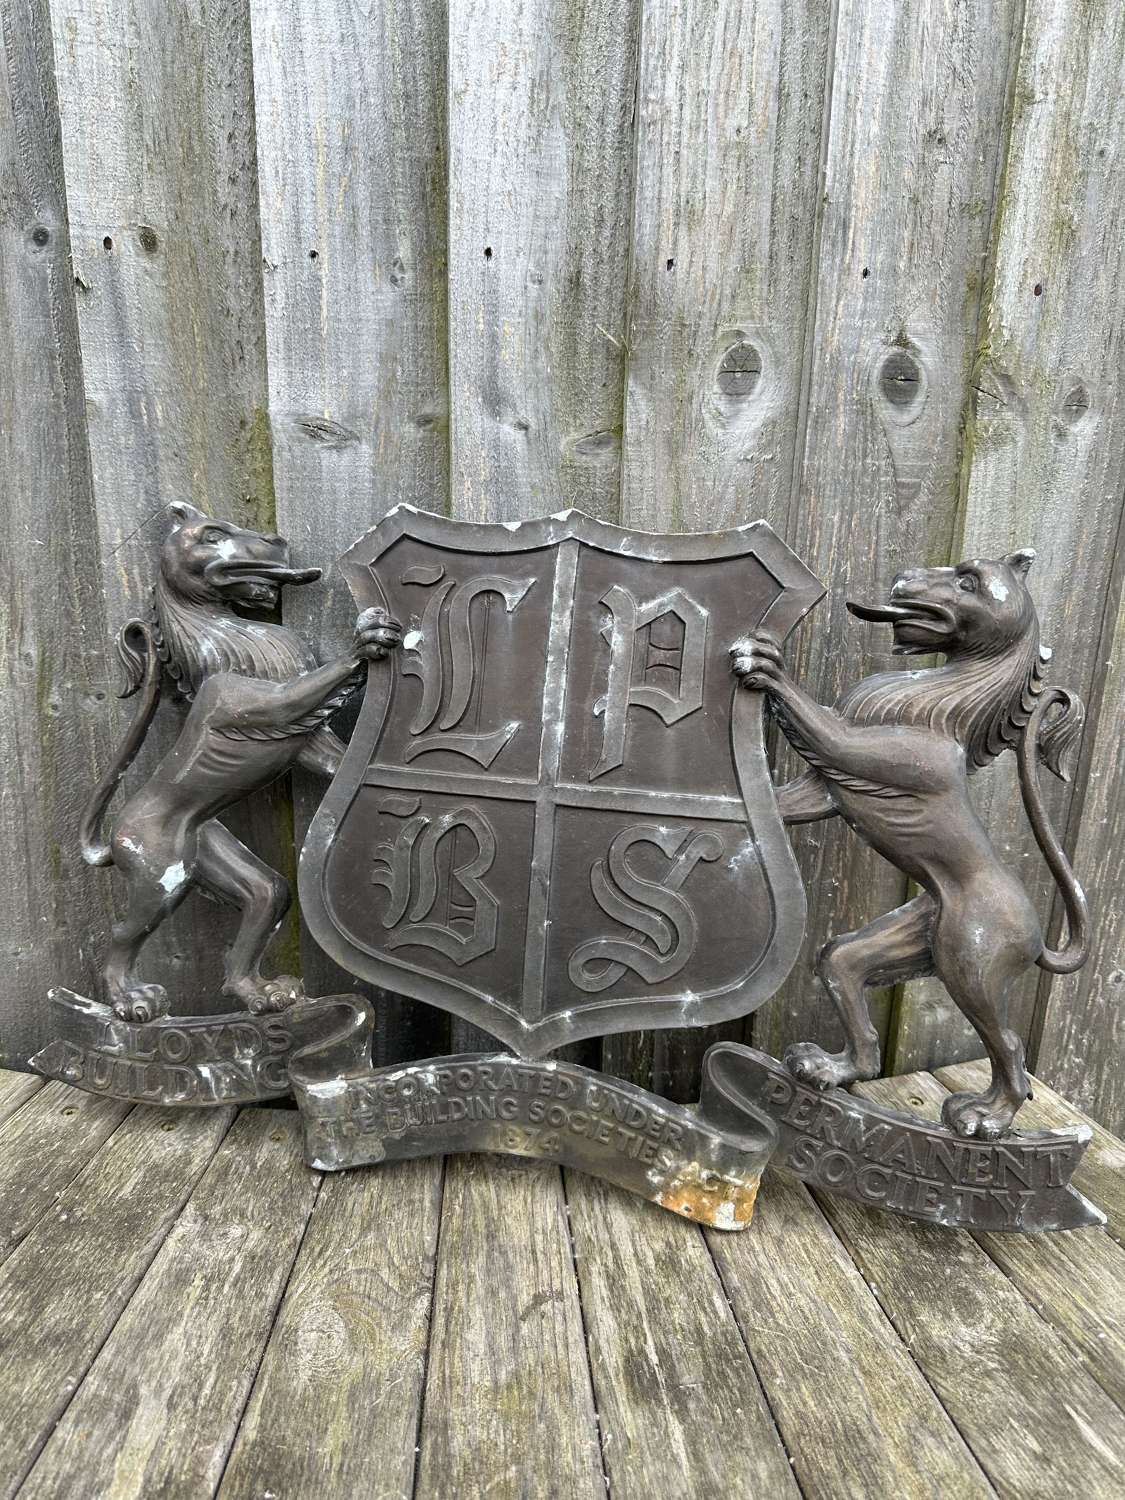 Stunning lloyd building society coat of arms